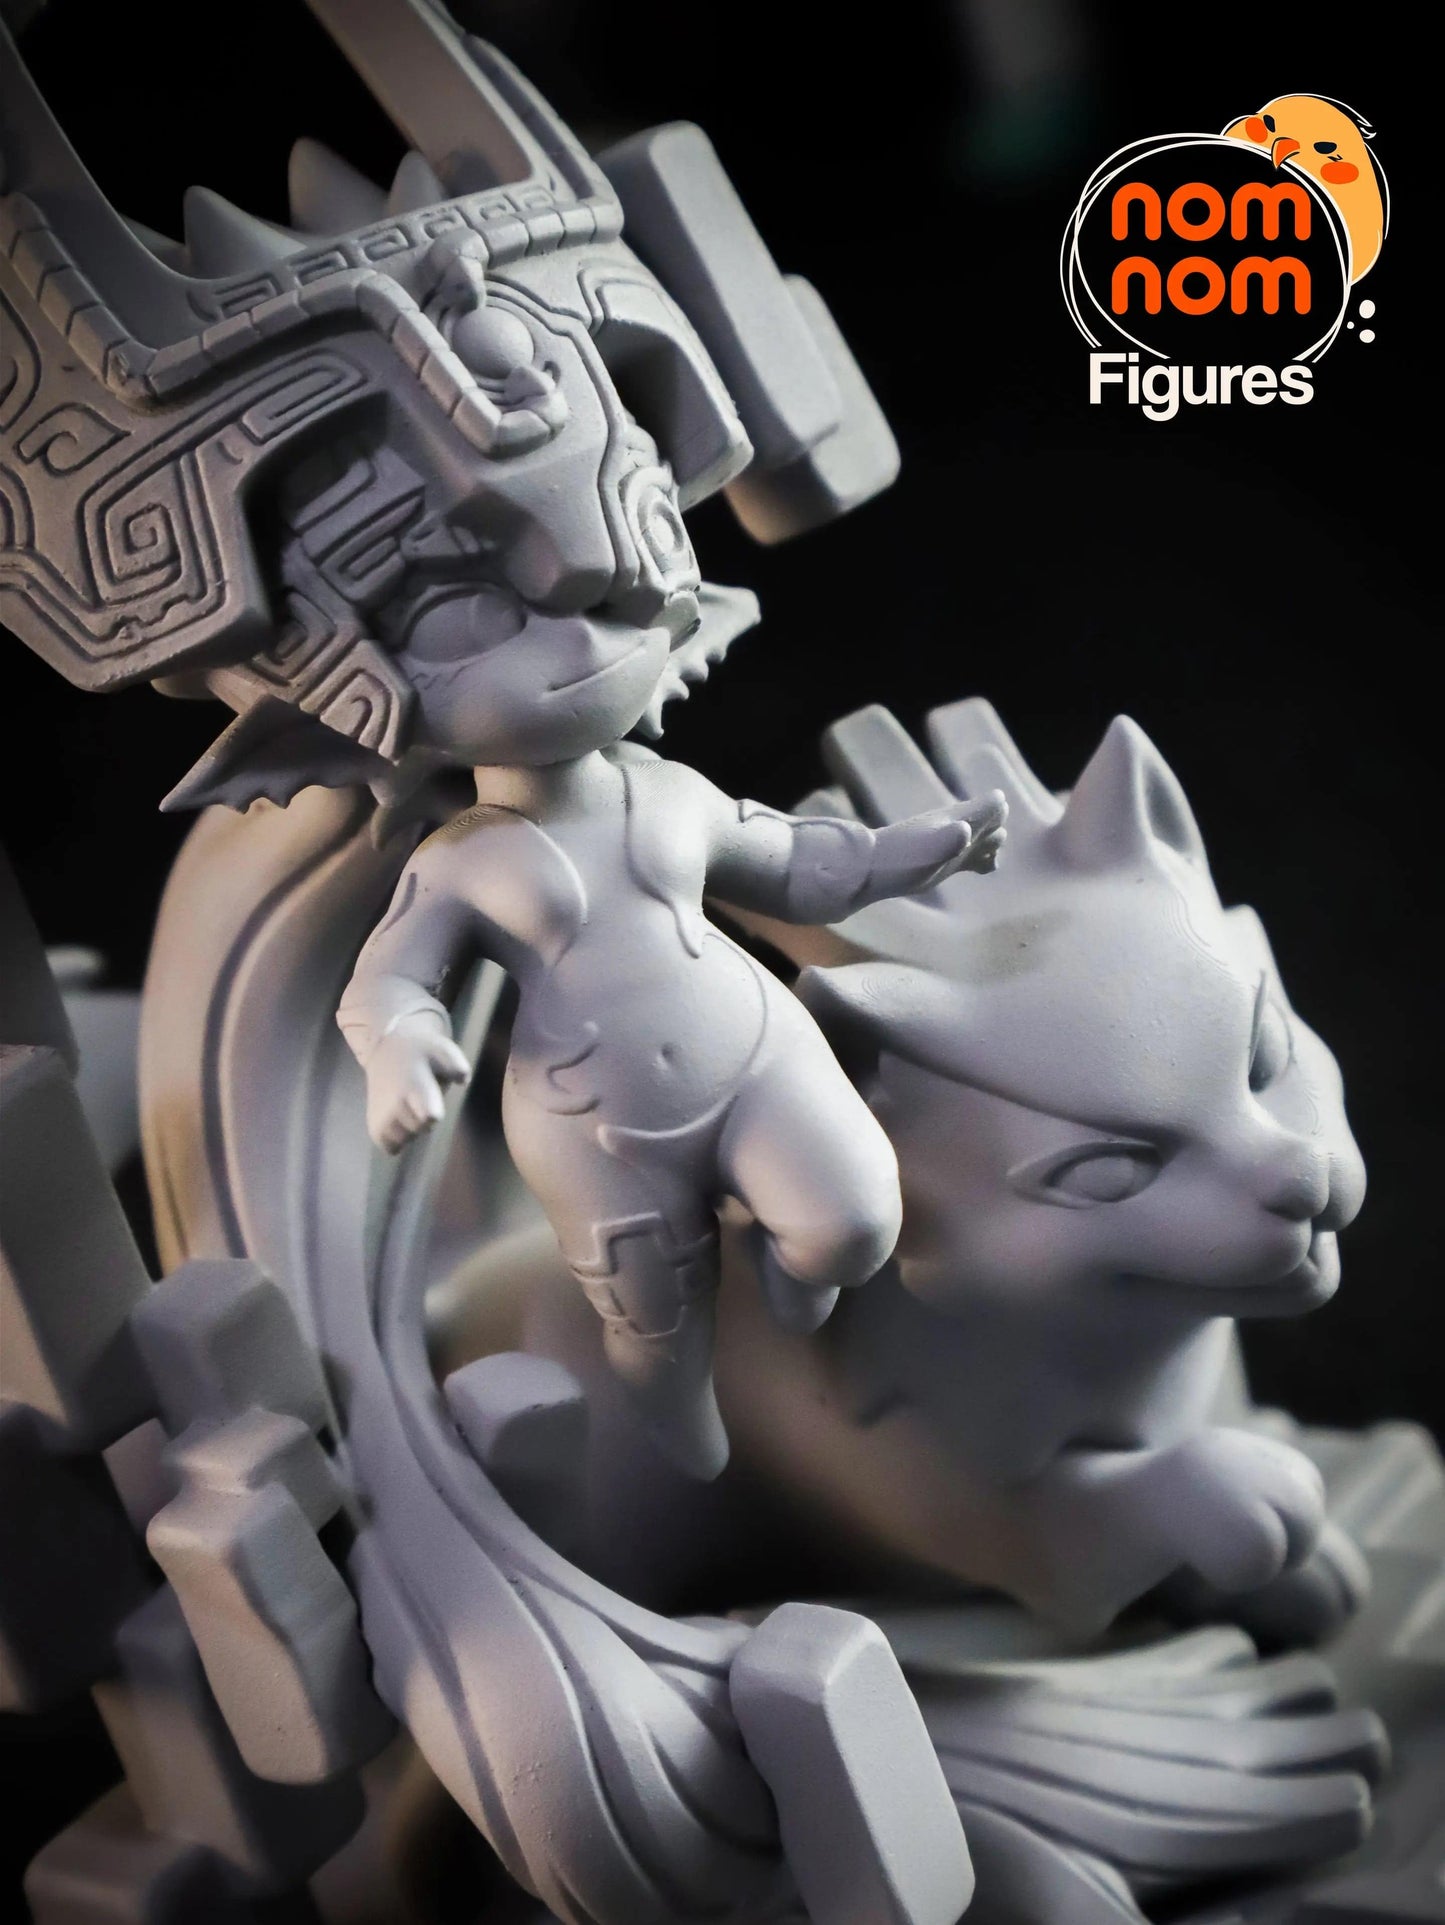 Chibi Twilit Princess and Her Wolf Knight | Resin Garage Kit Sculpture Anime Video Game Fan Art Statue | Nomnom Figures - Tattles Told 3D